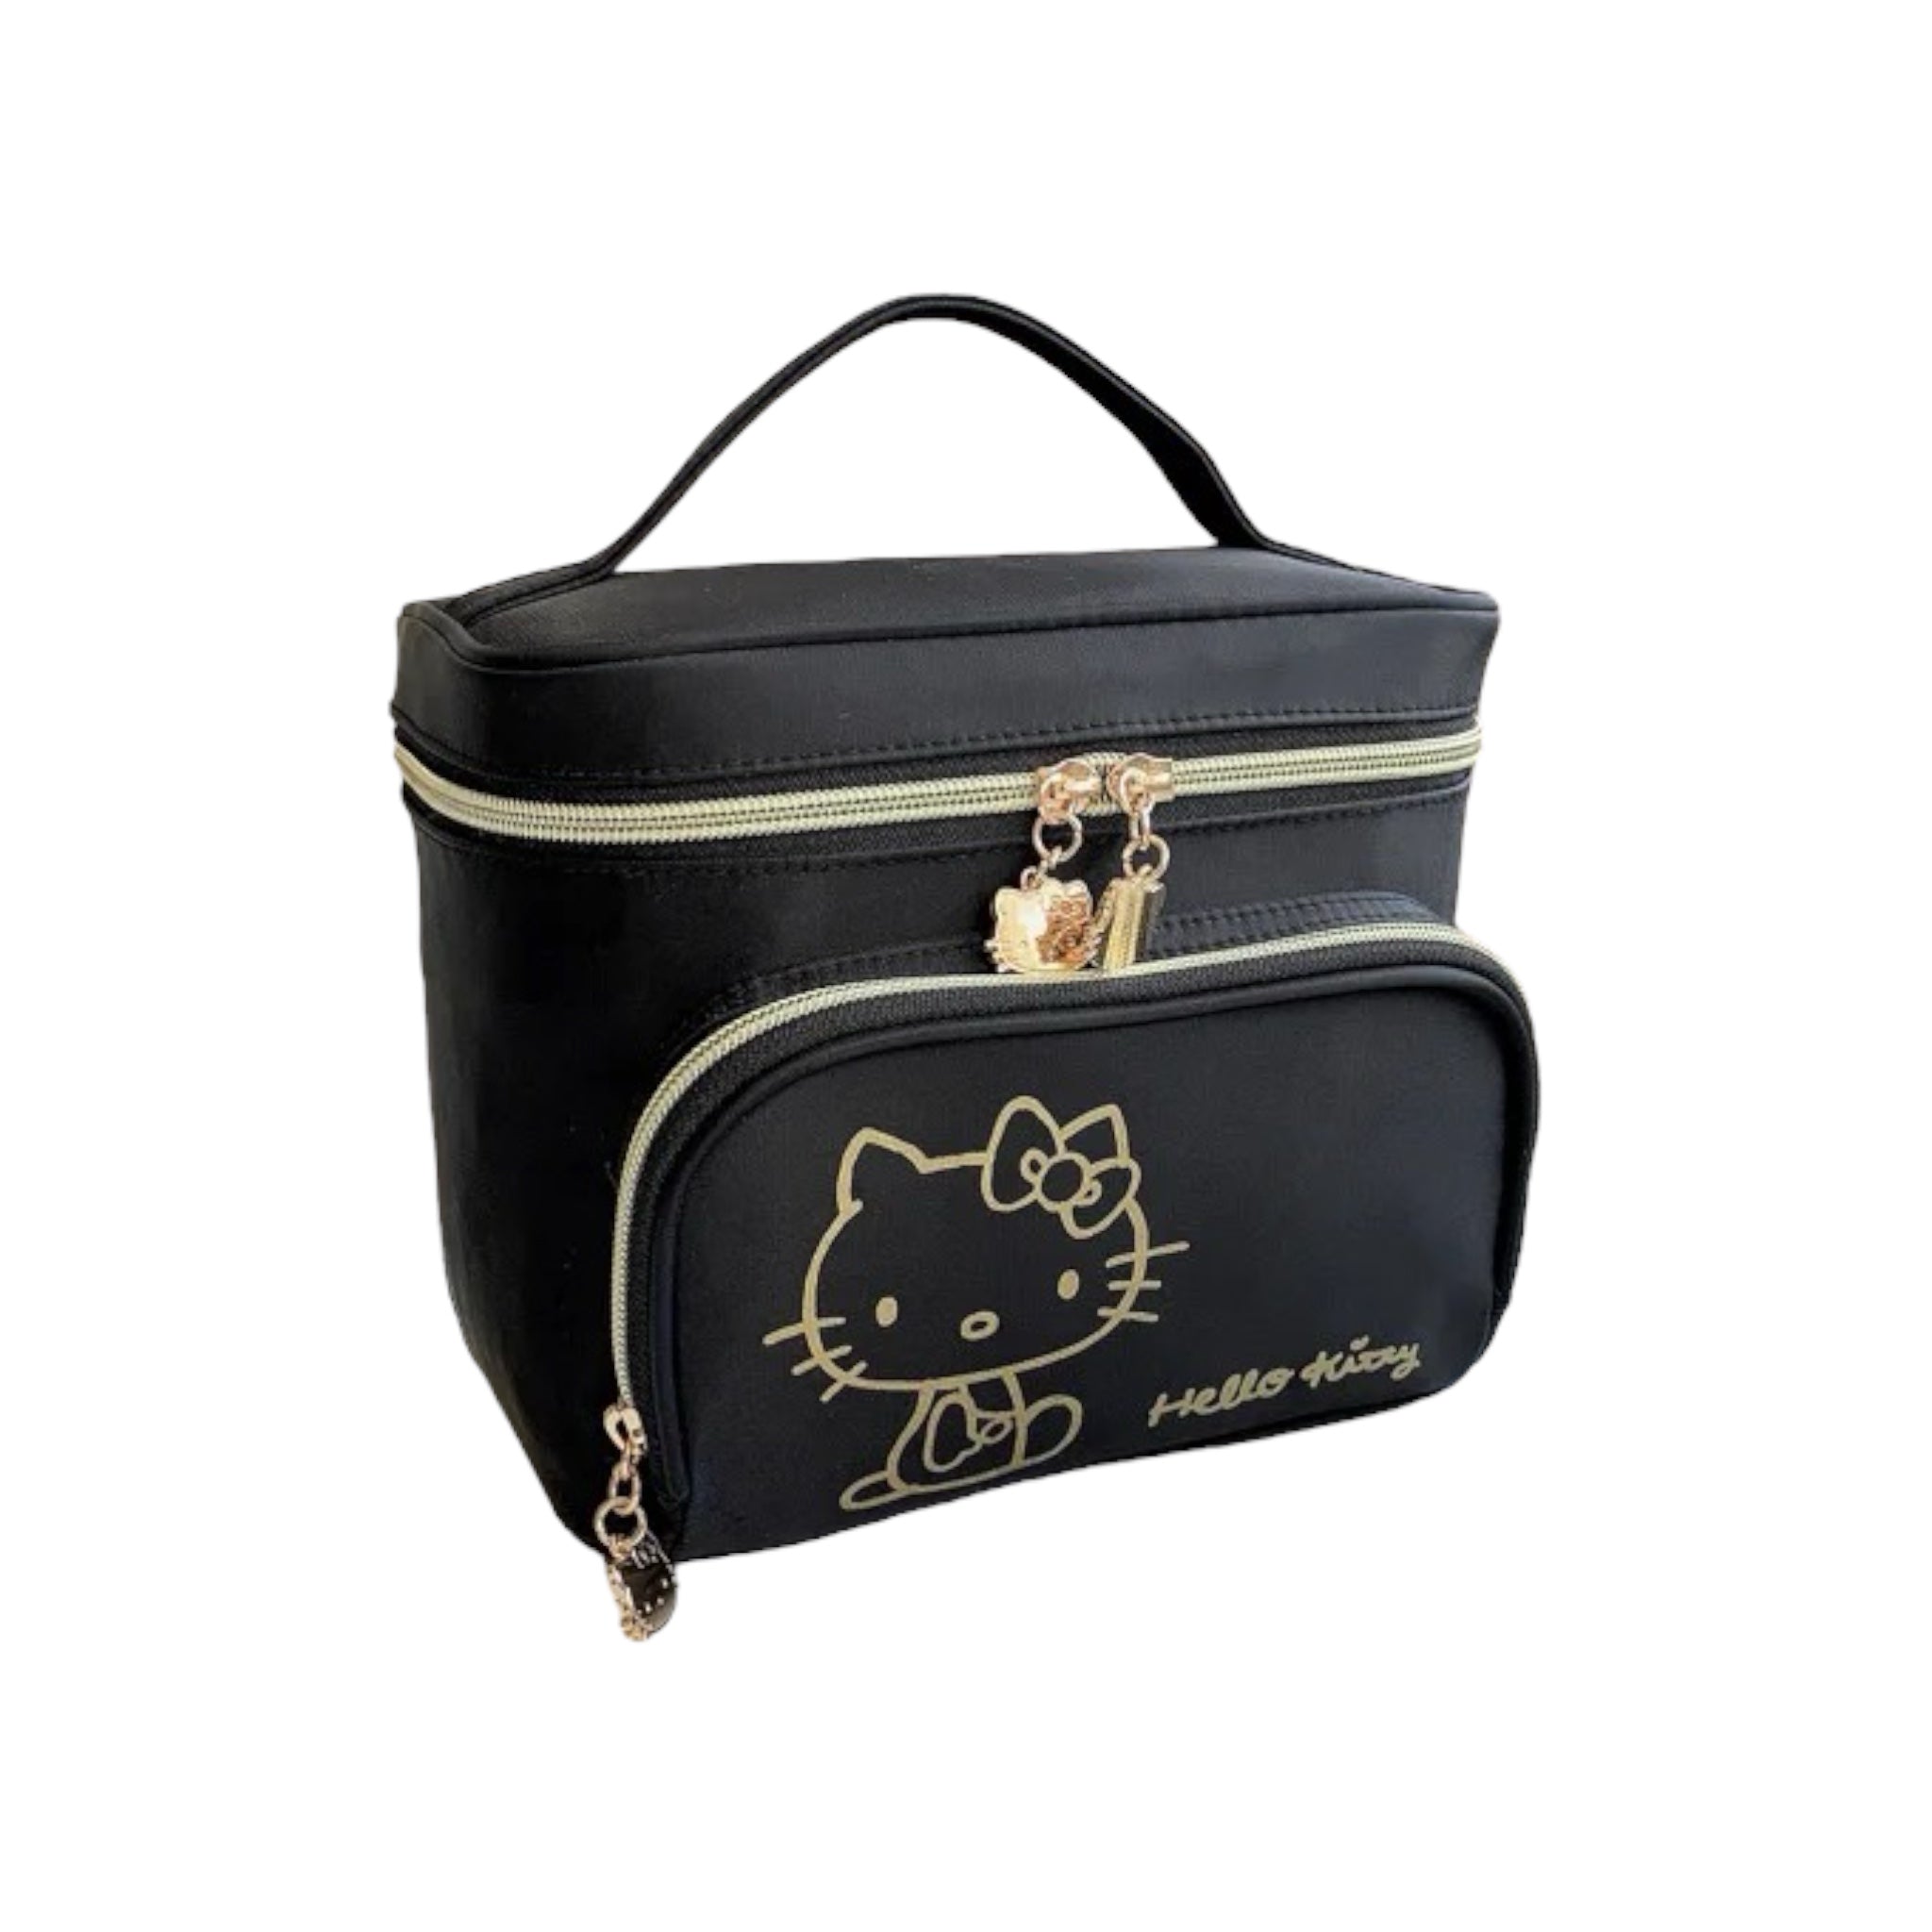 Hello Kitty Cosmetic Bag